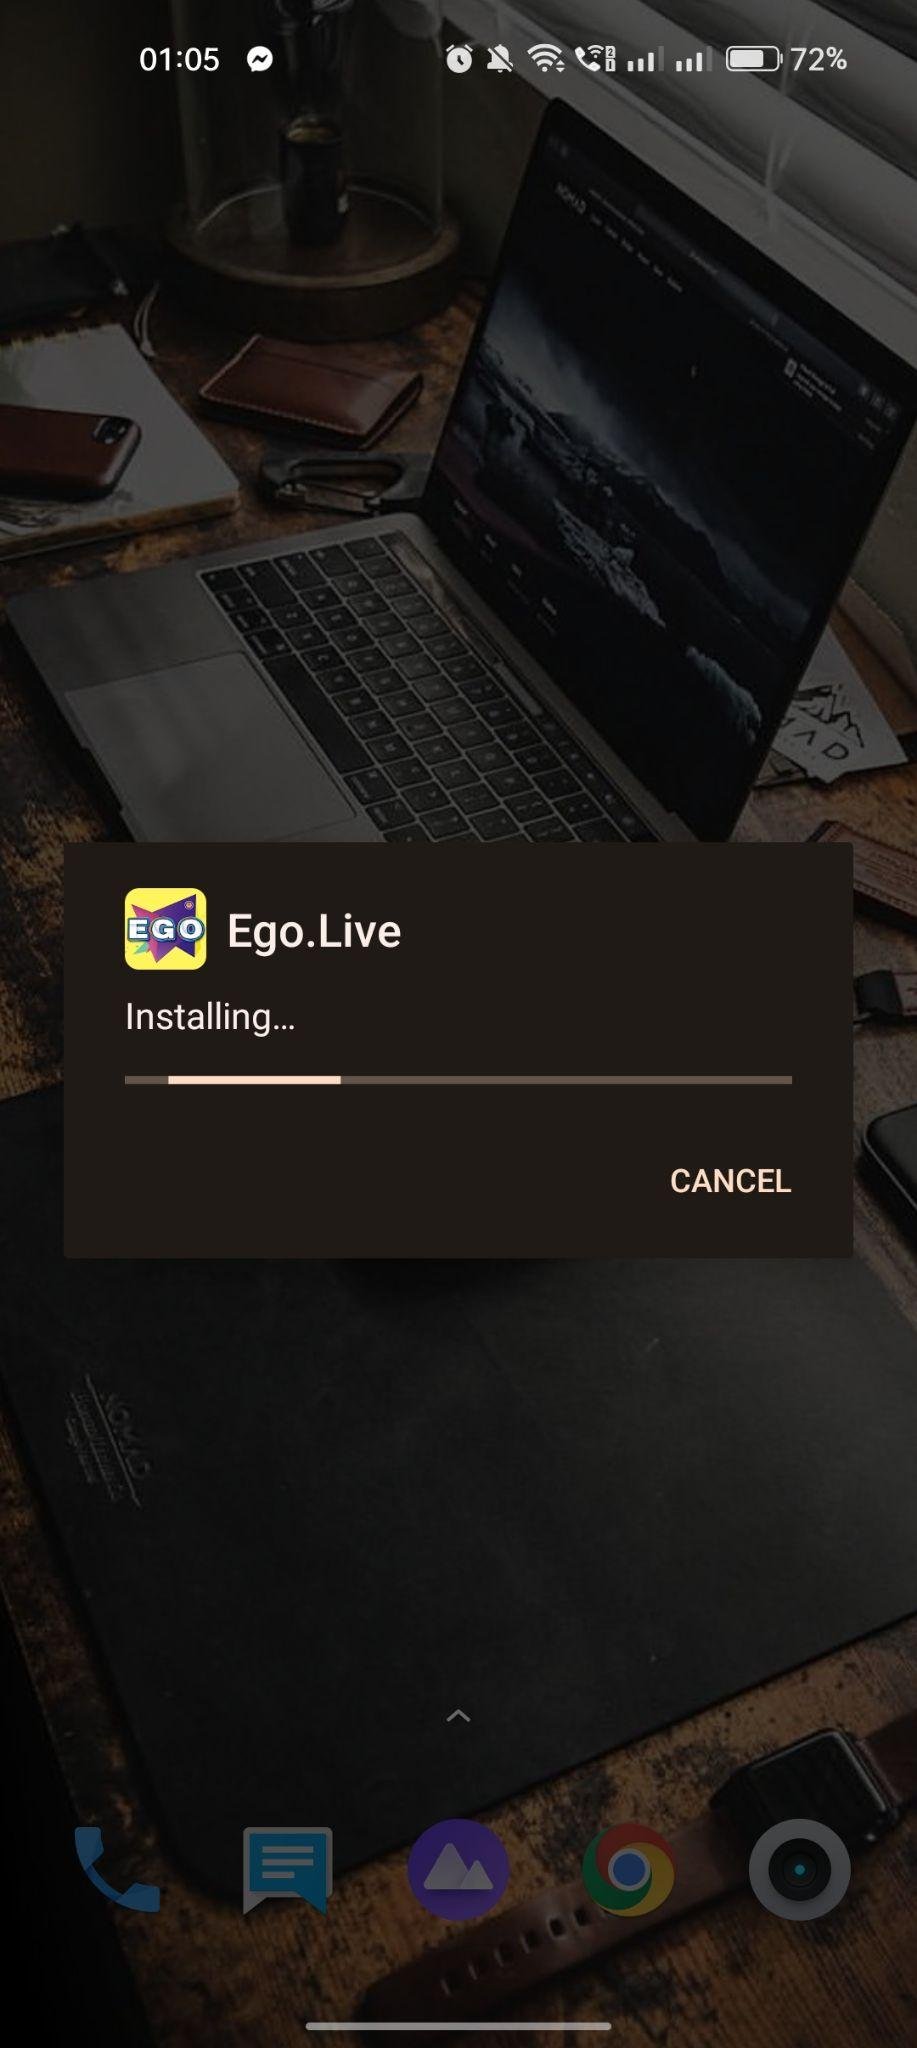 Ego.Live apk installing